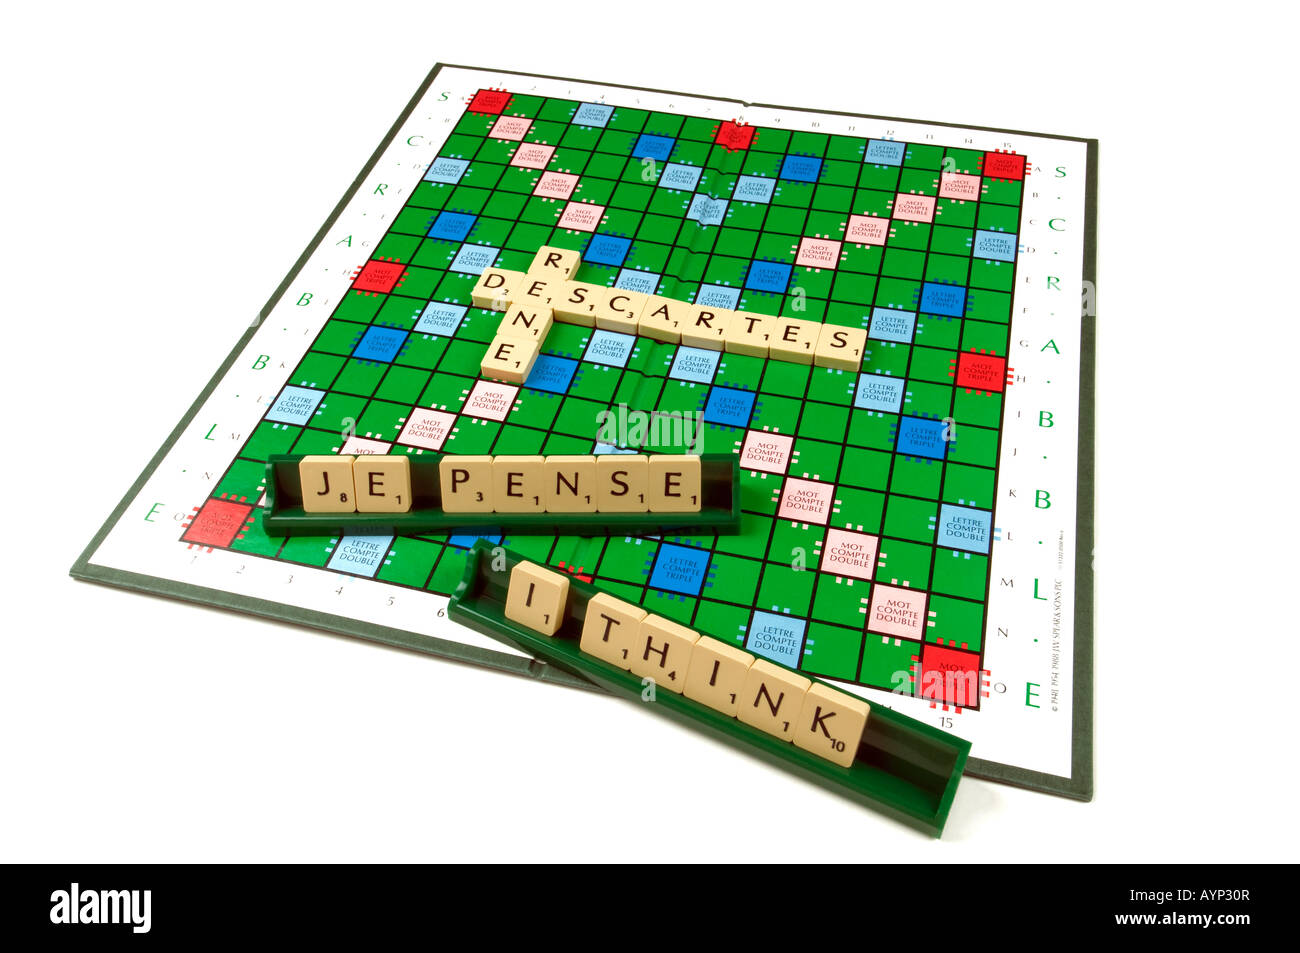 Réné Descartes - Je pense / I think - Scrabble board. Stock Photo